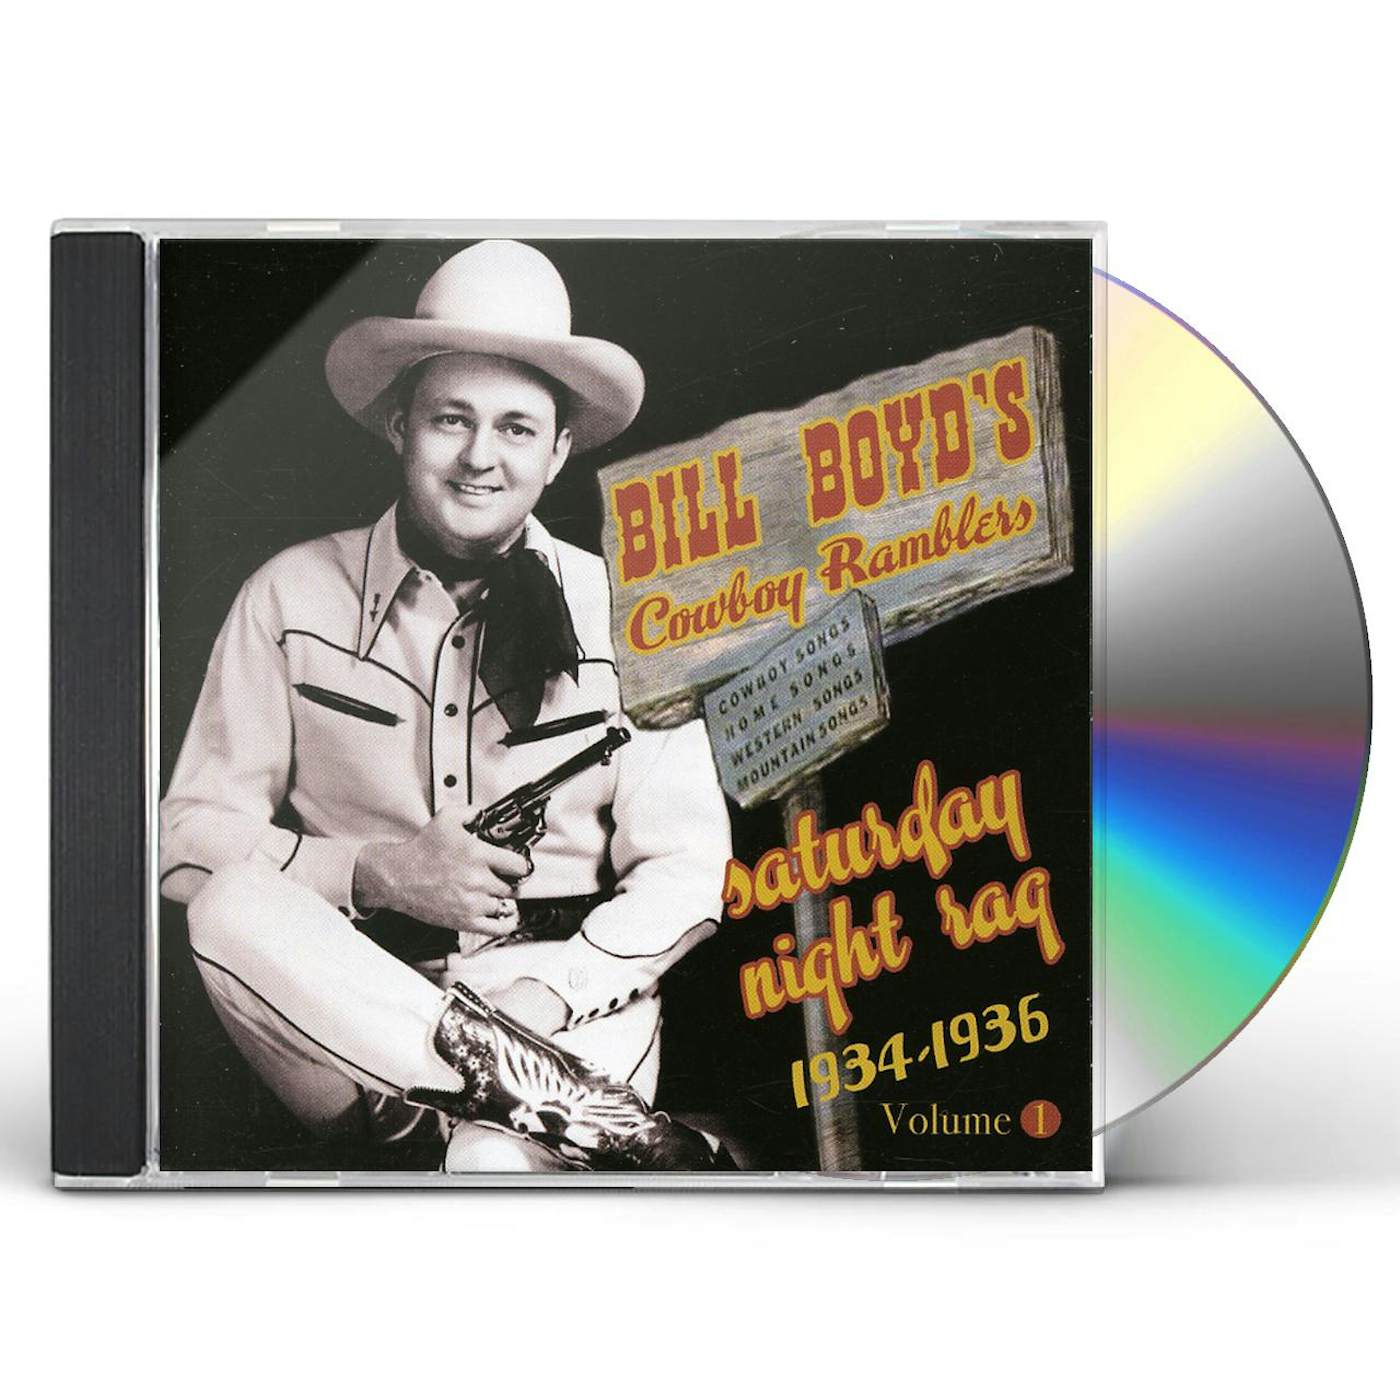 Bill Boyd SATURDAY NIGHT RAG: 1934-1936 CD